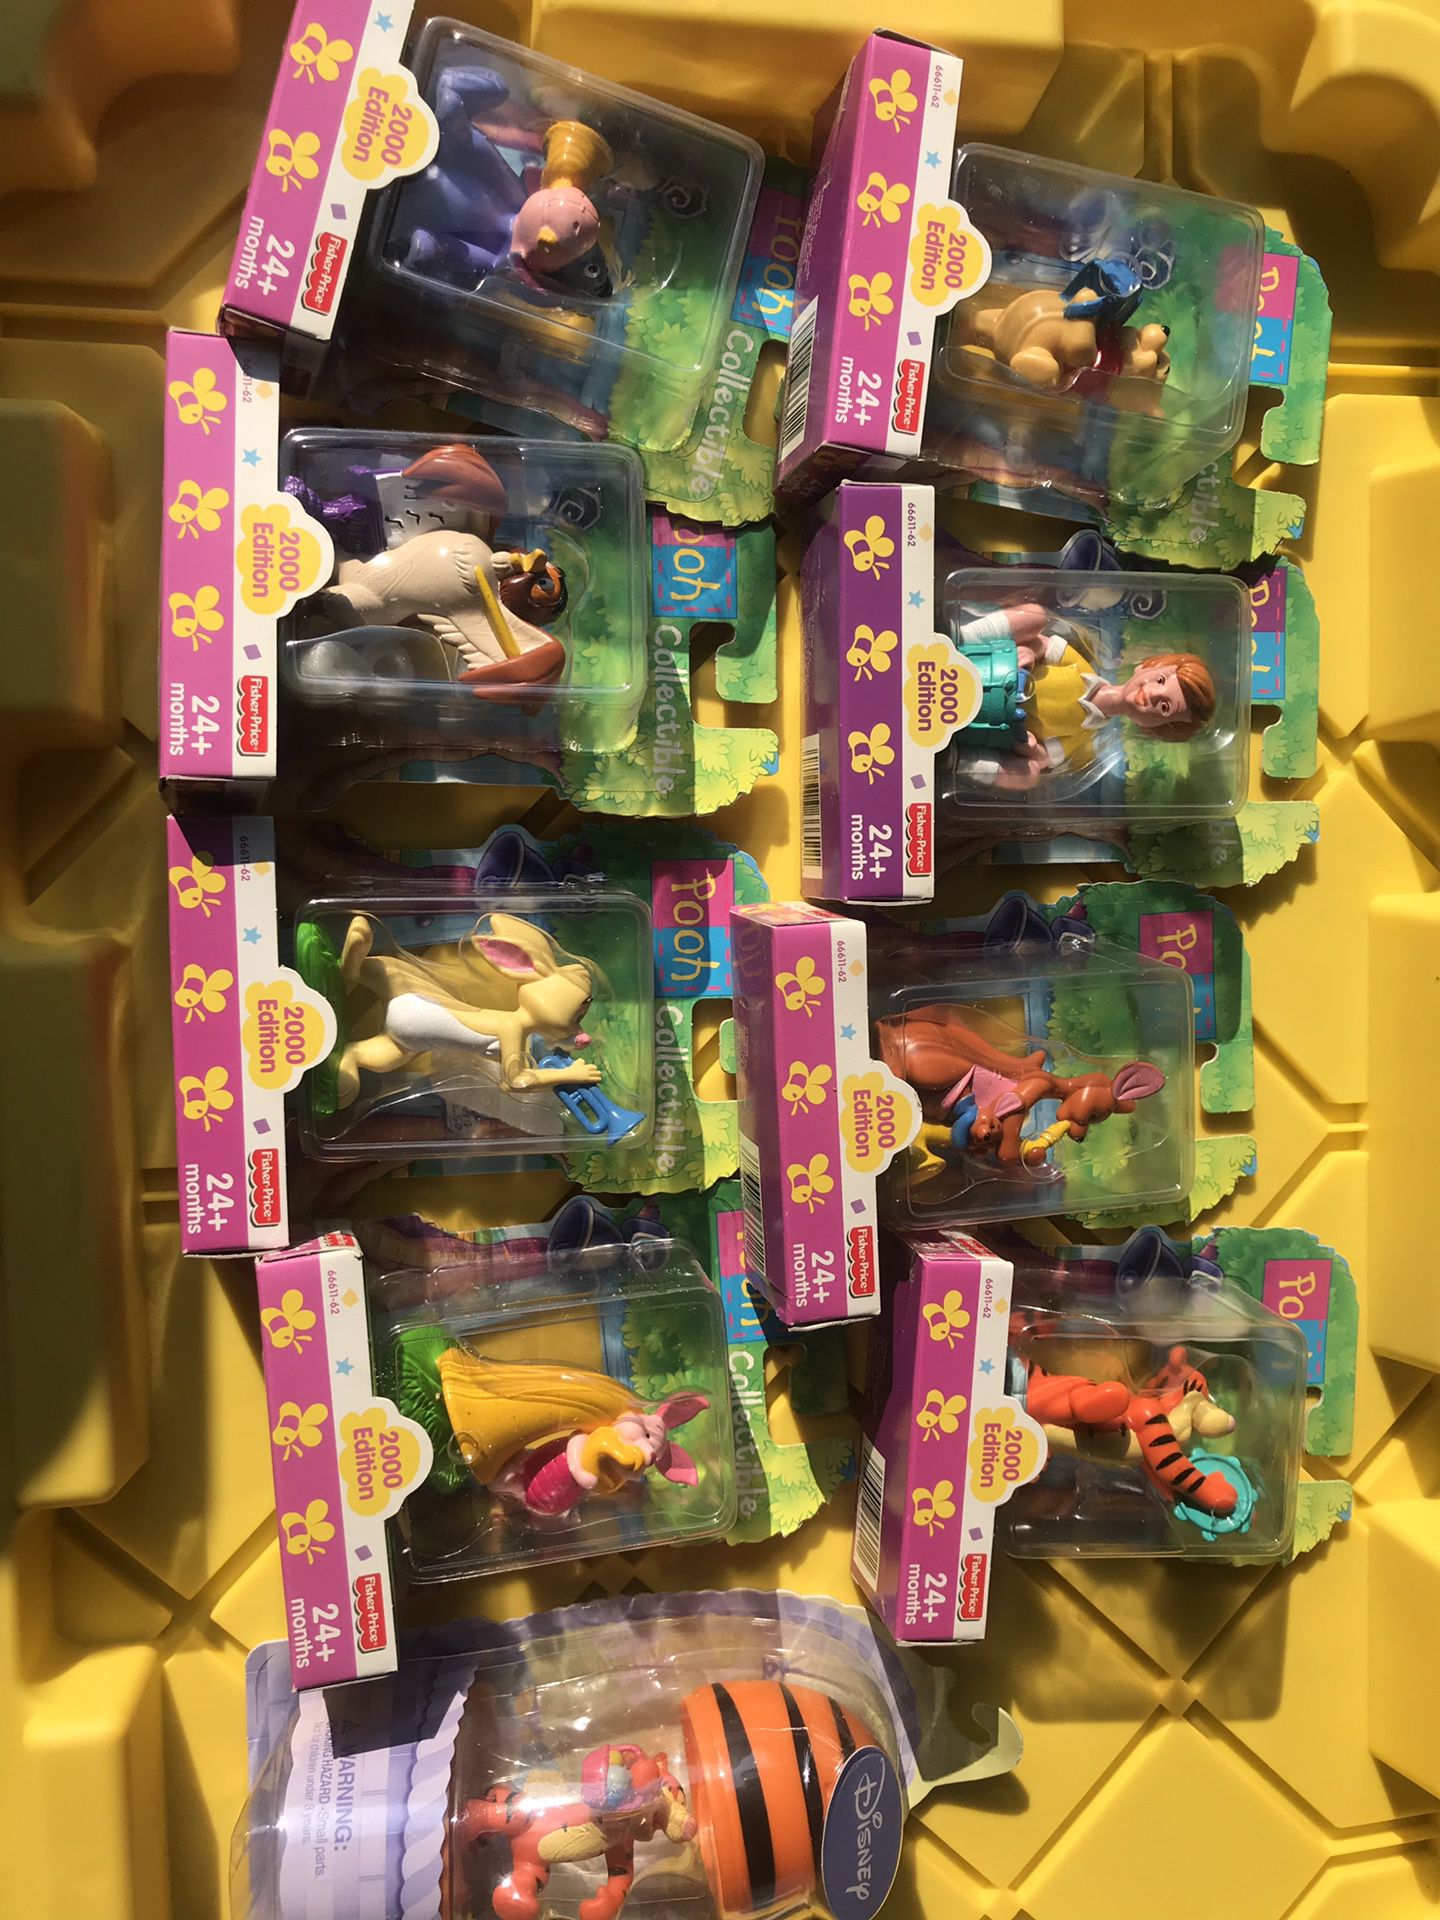 Disney 2000th edition figurines